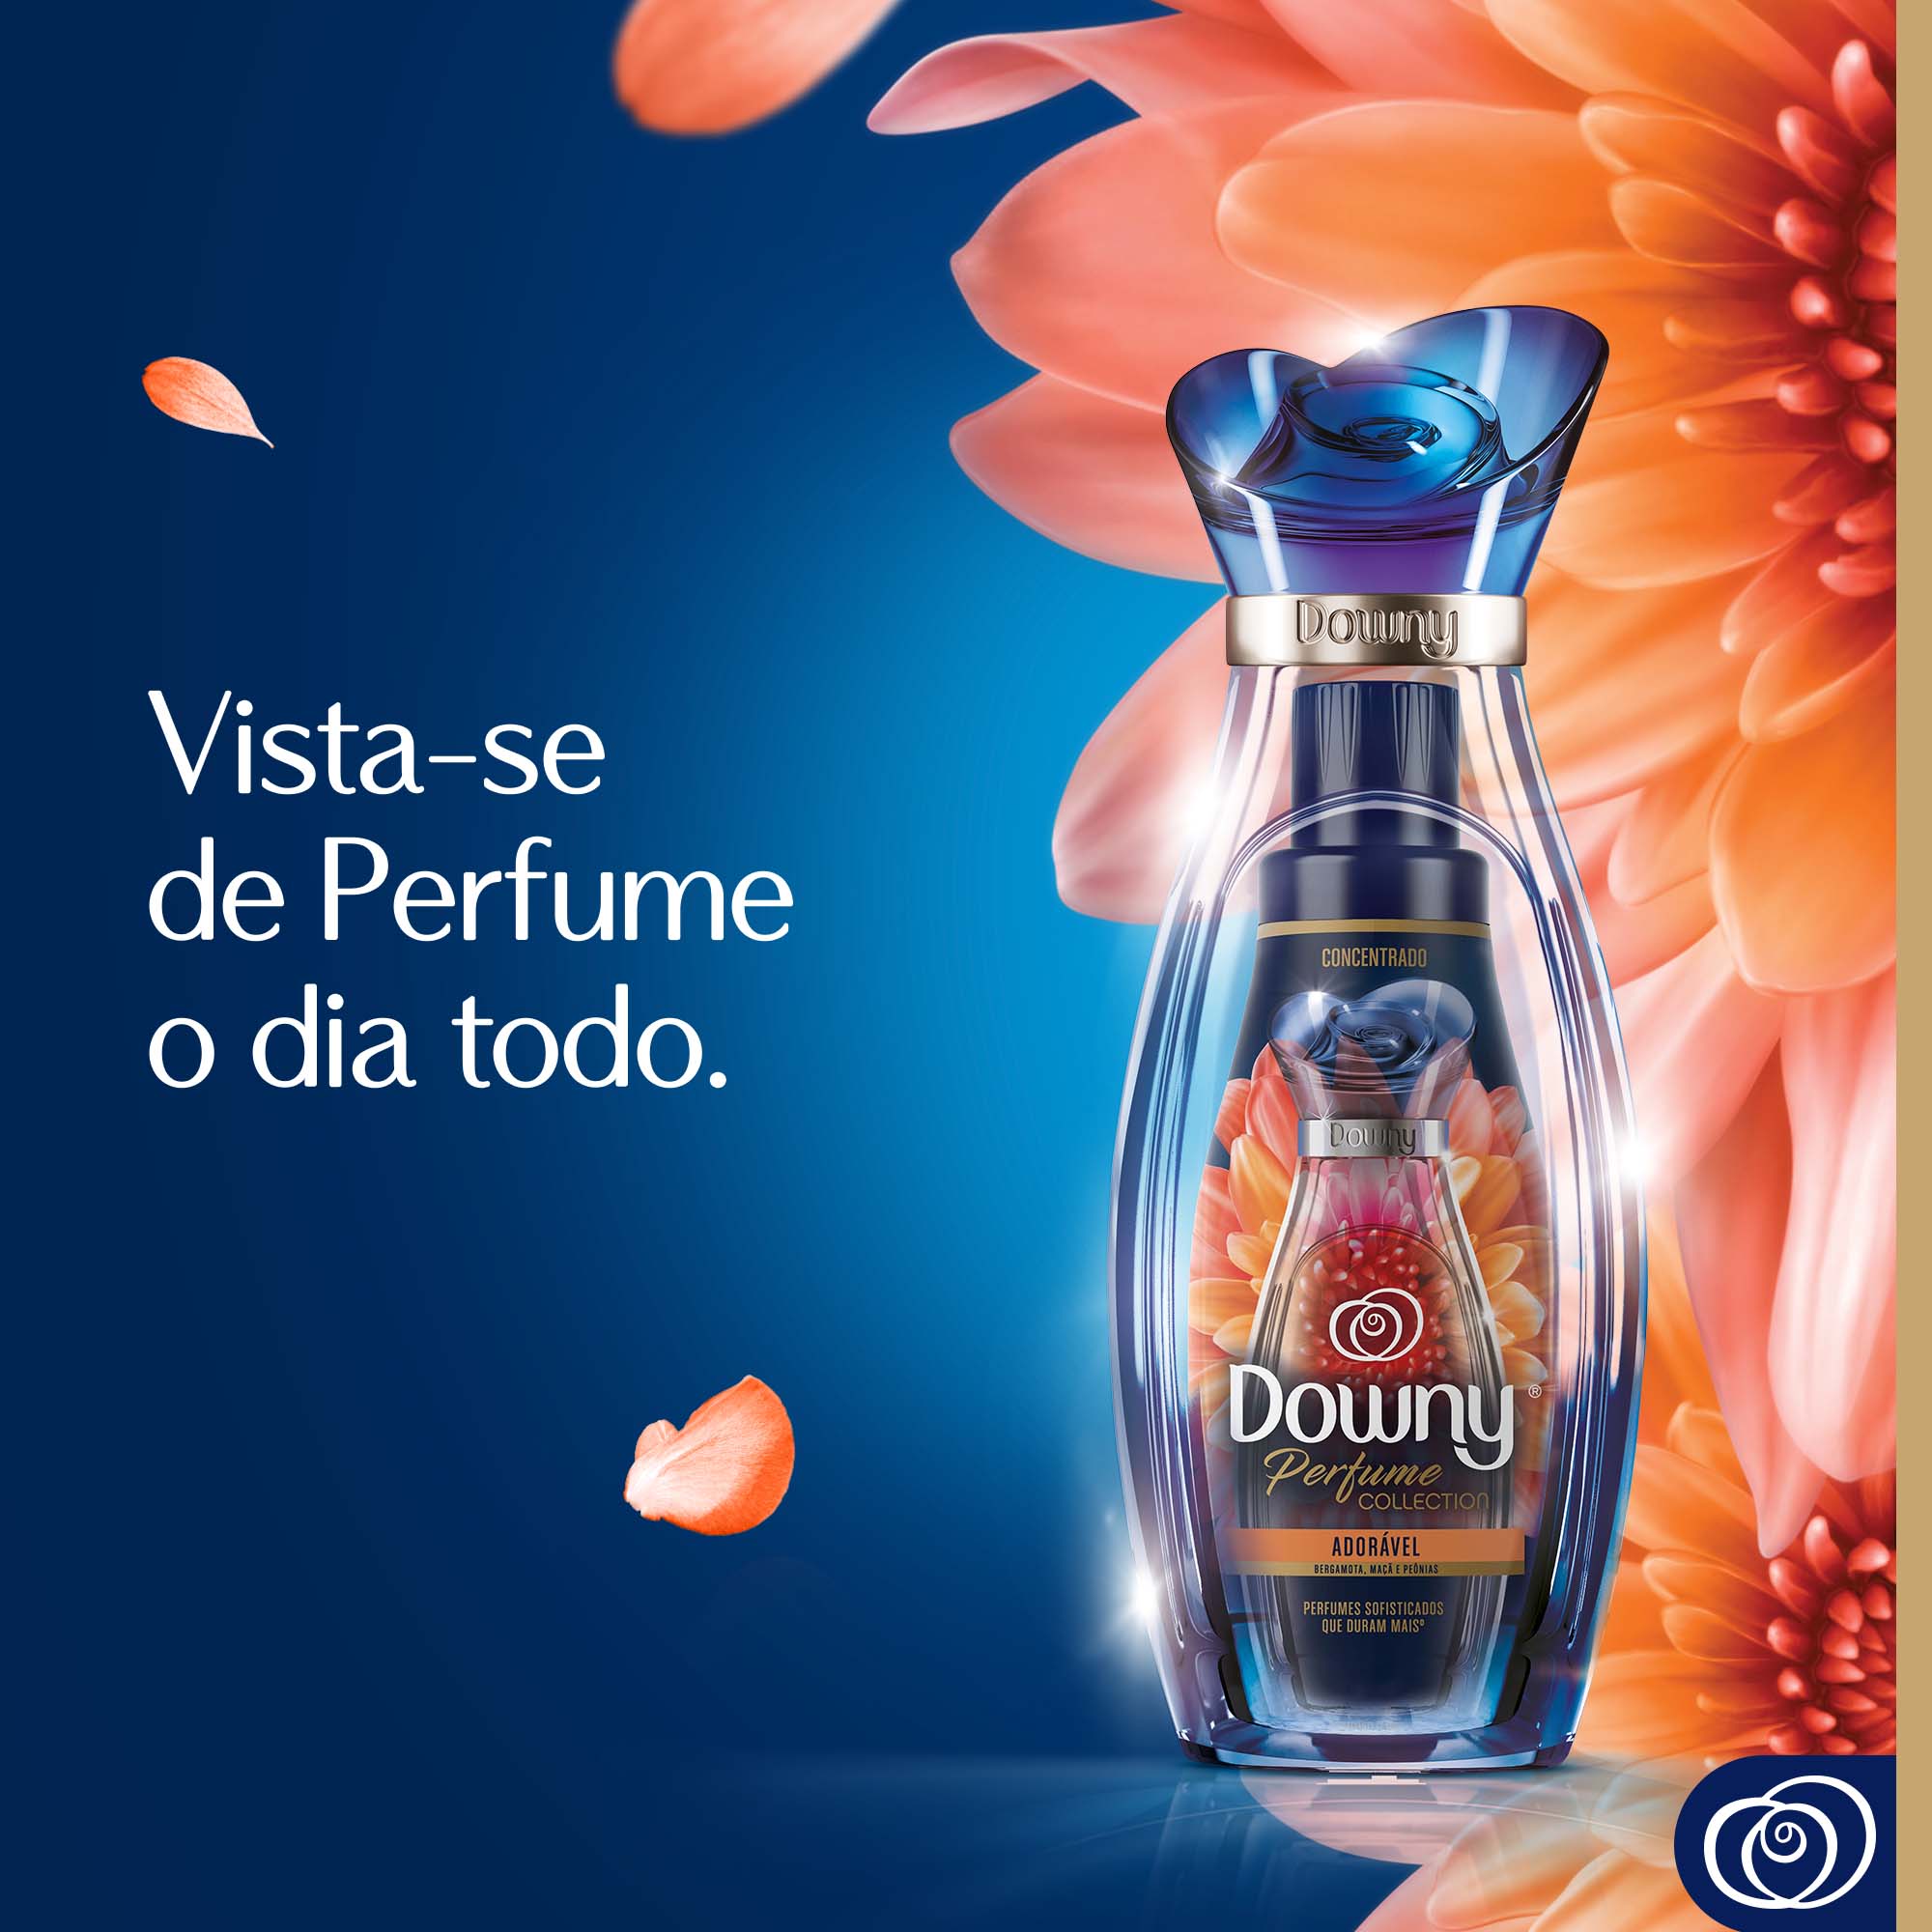 Amaciante Downy Perfume Collection Adorável - Vista-se de Perfume o dia todo